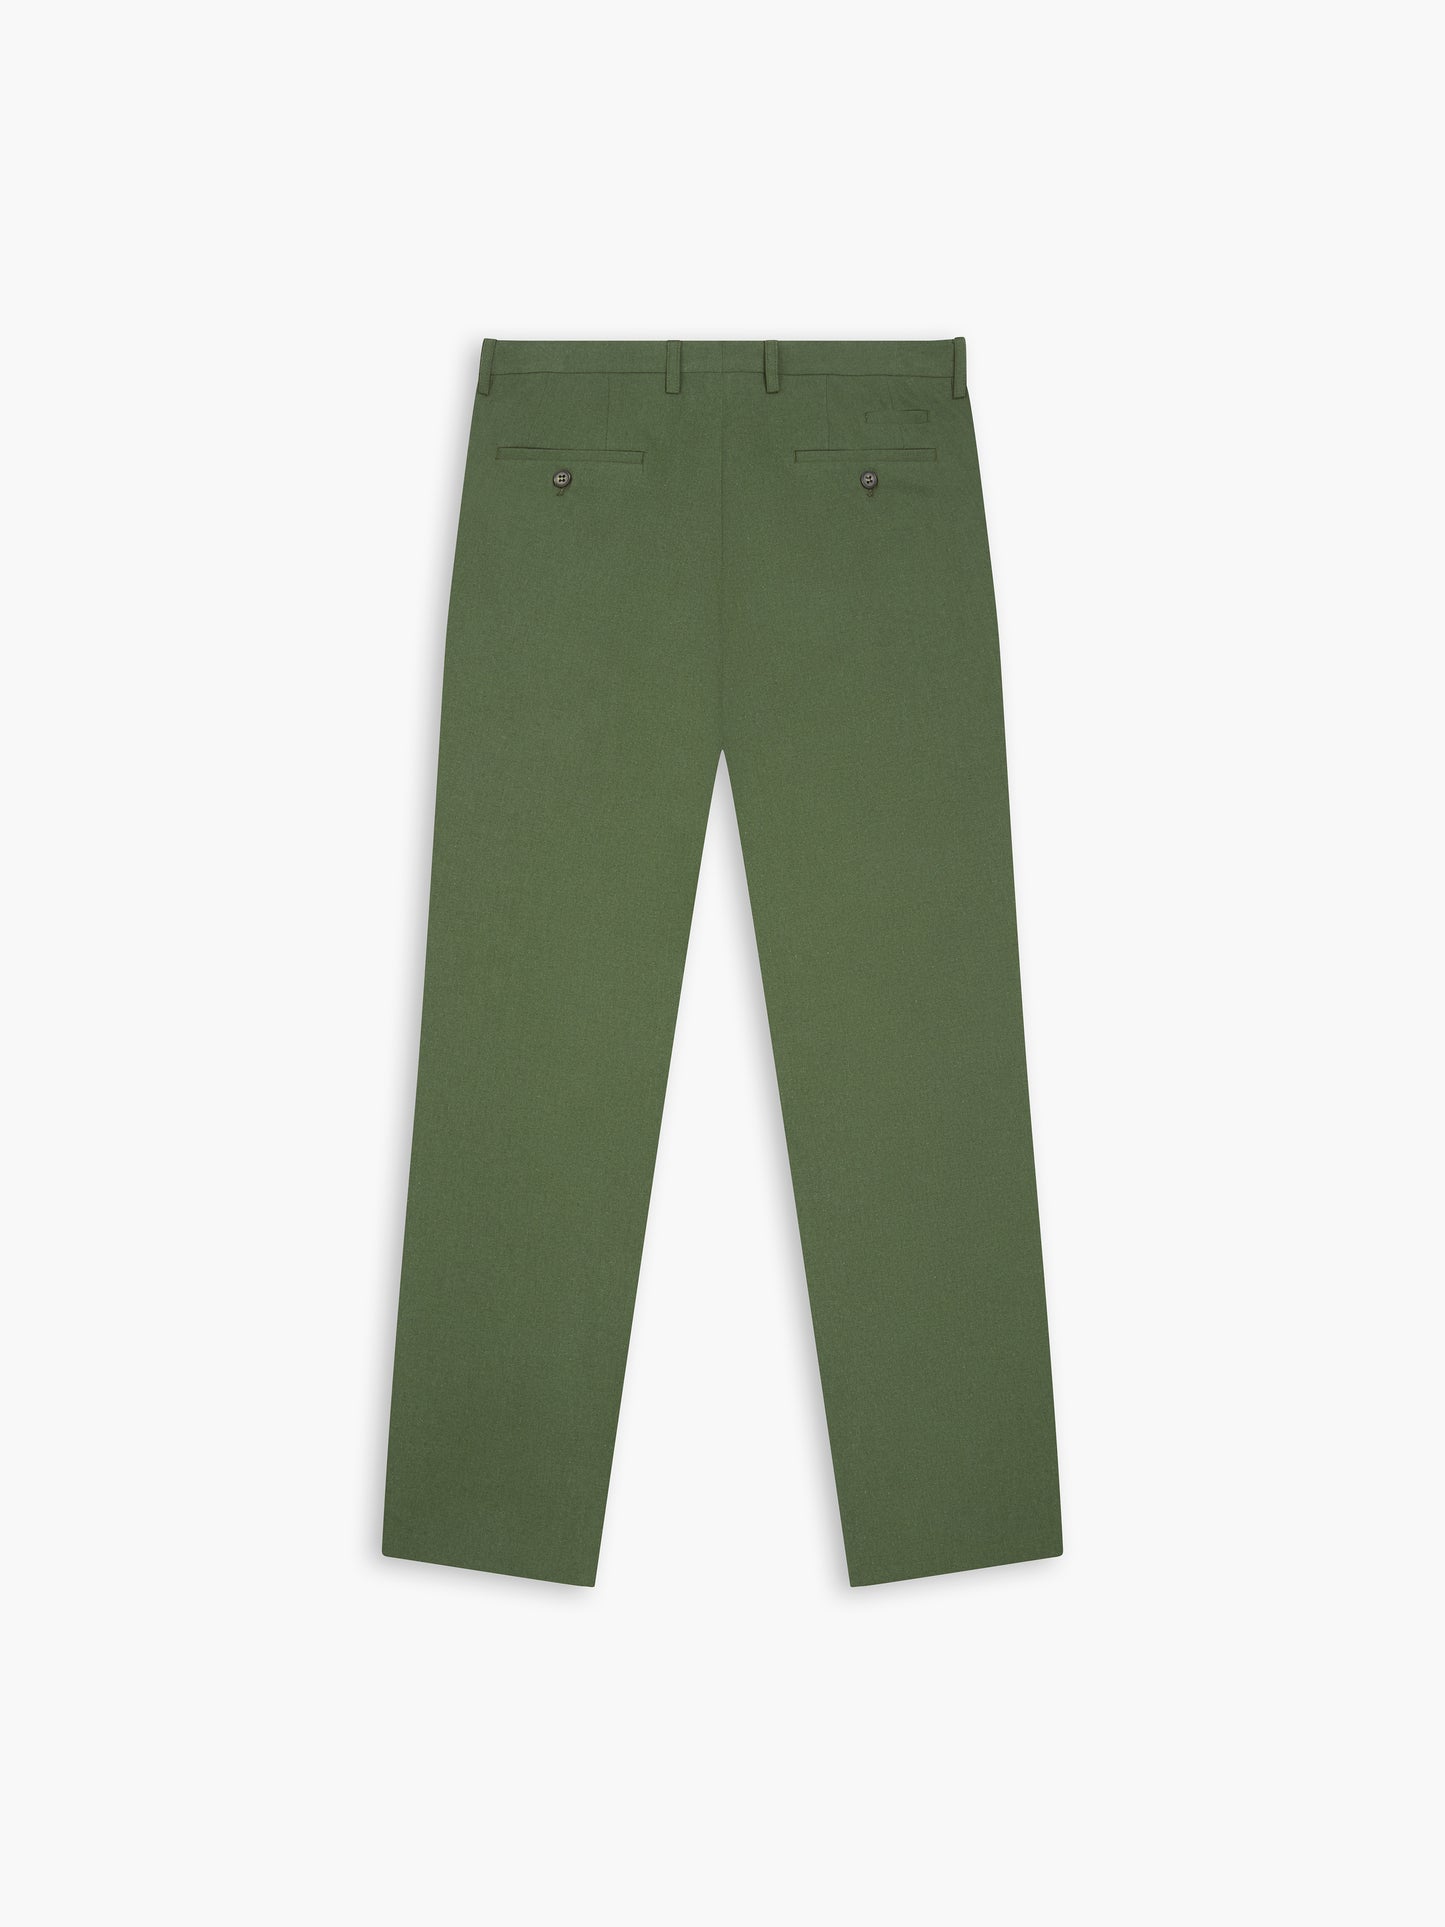 Piccadilly Linen Slim Dark Green Suit Trouser